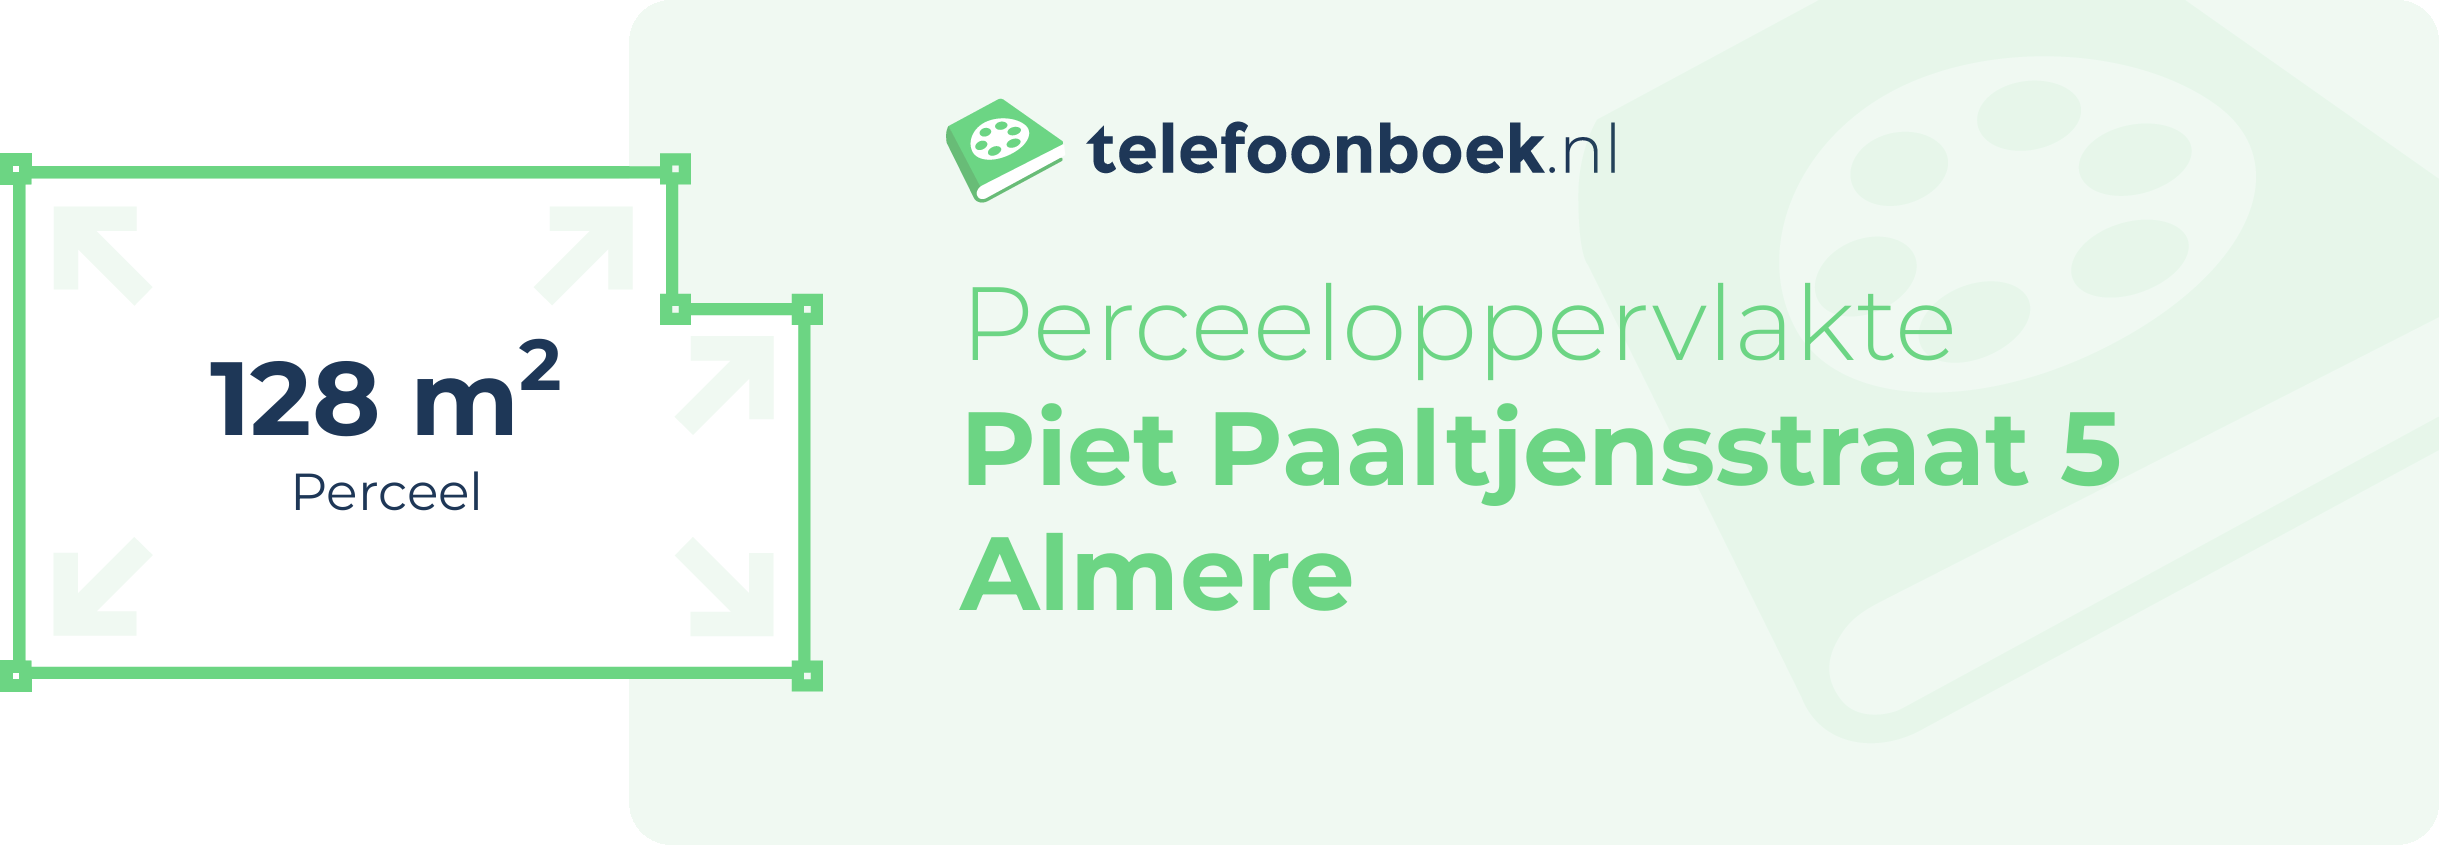 Perceeloppervlakte Piet Paaltjensstraat 5 Almere